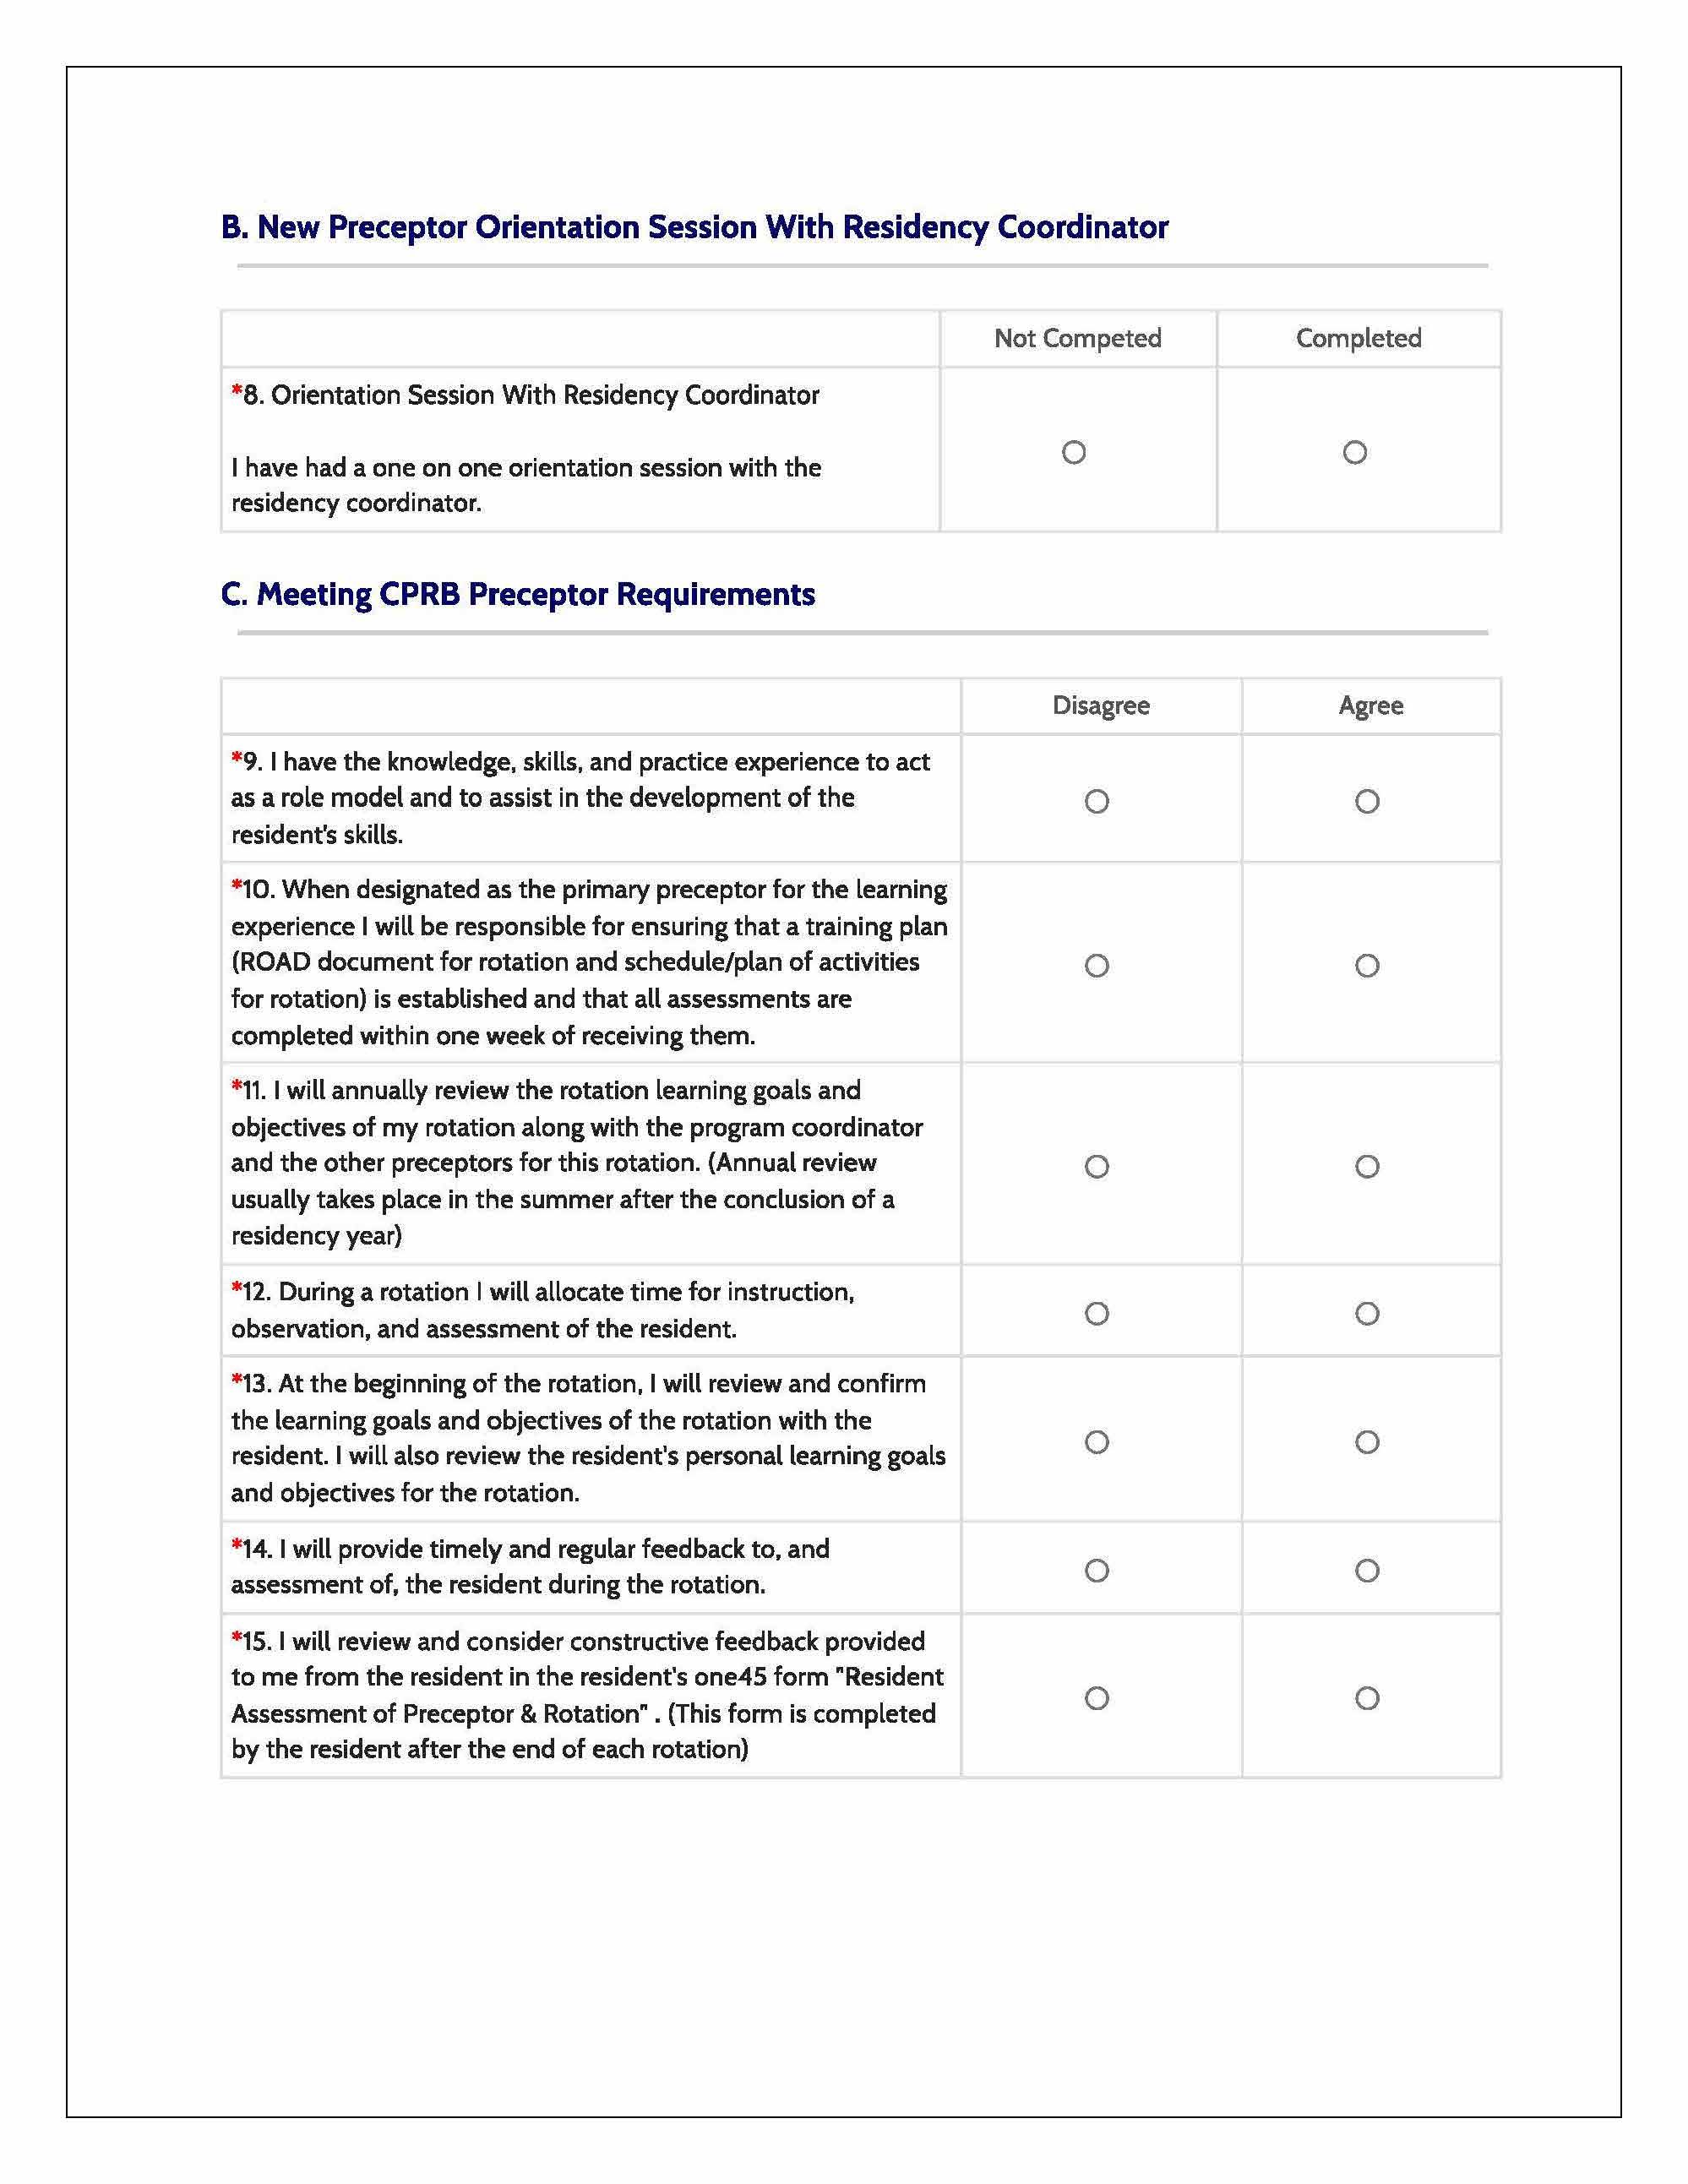 New Preceptor Self Assessment Orientation 2023 Final_Page_3.jpg